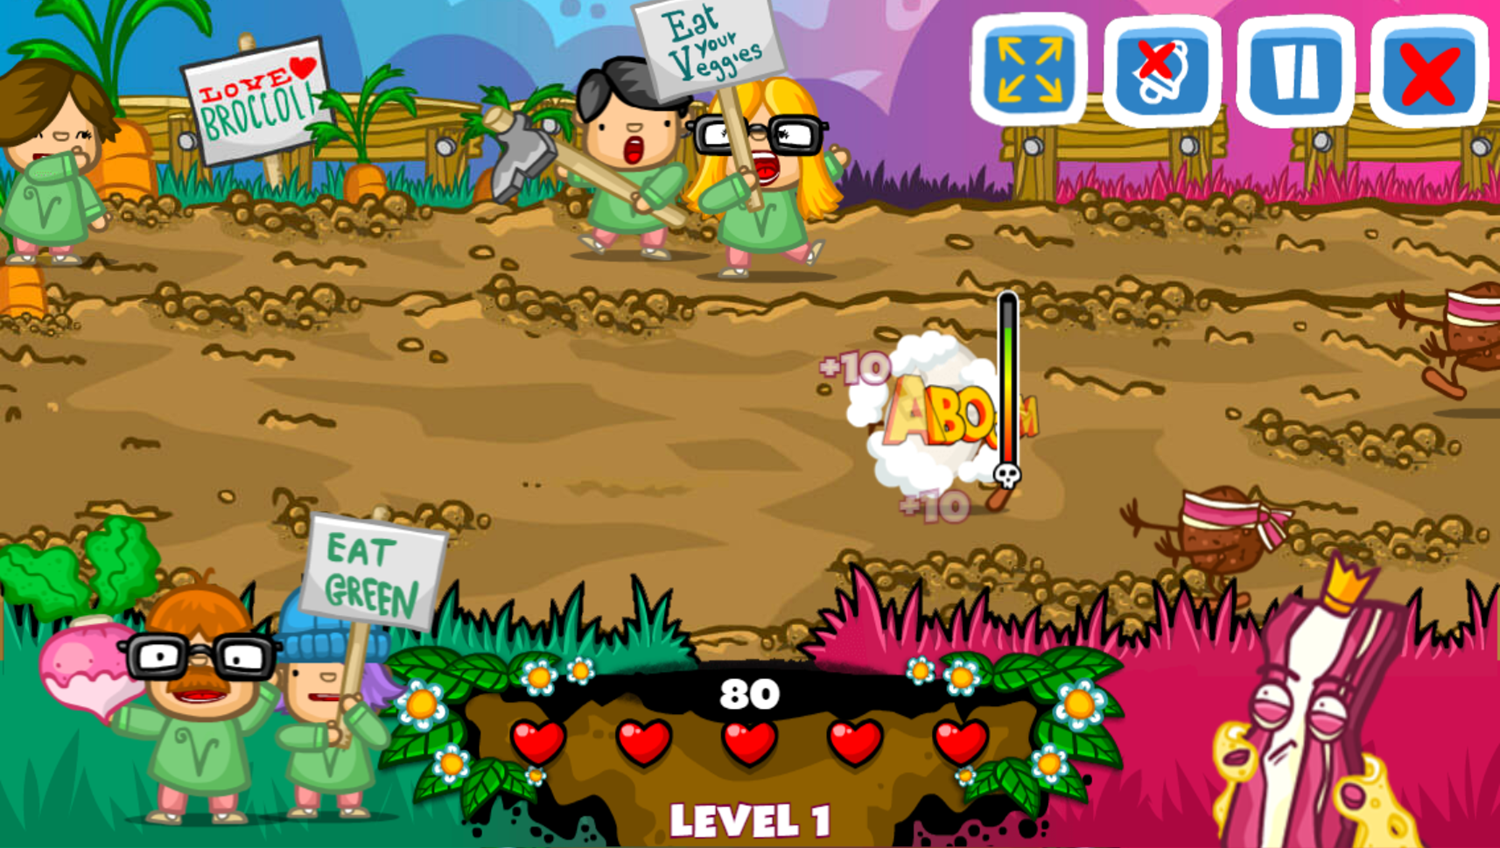 King Bacon vs Vegans Game Level Play Screenshot.